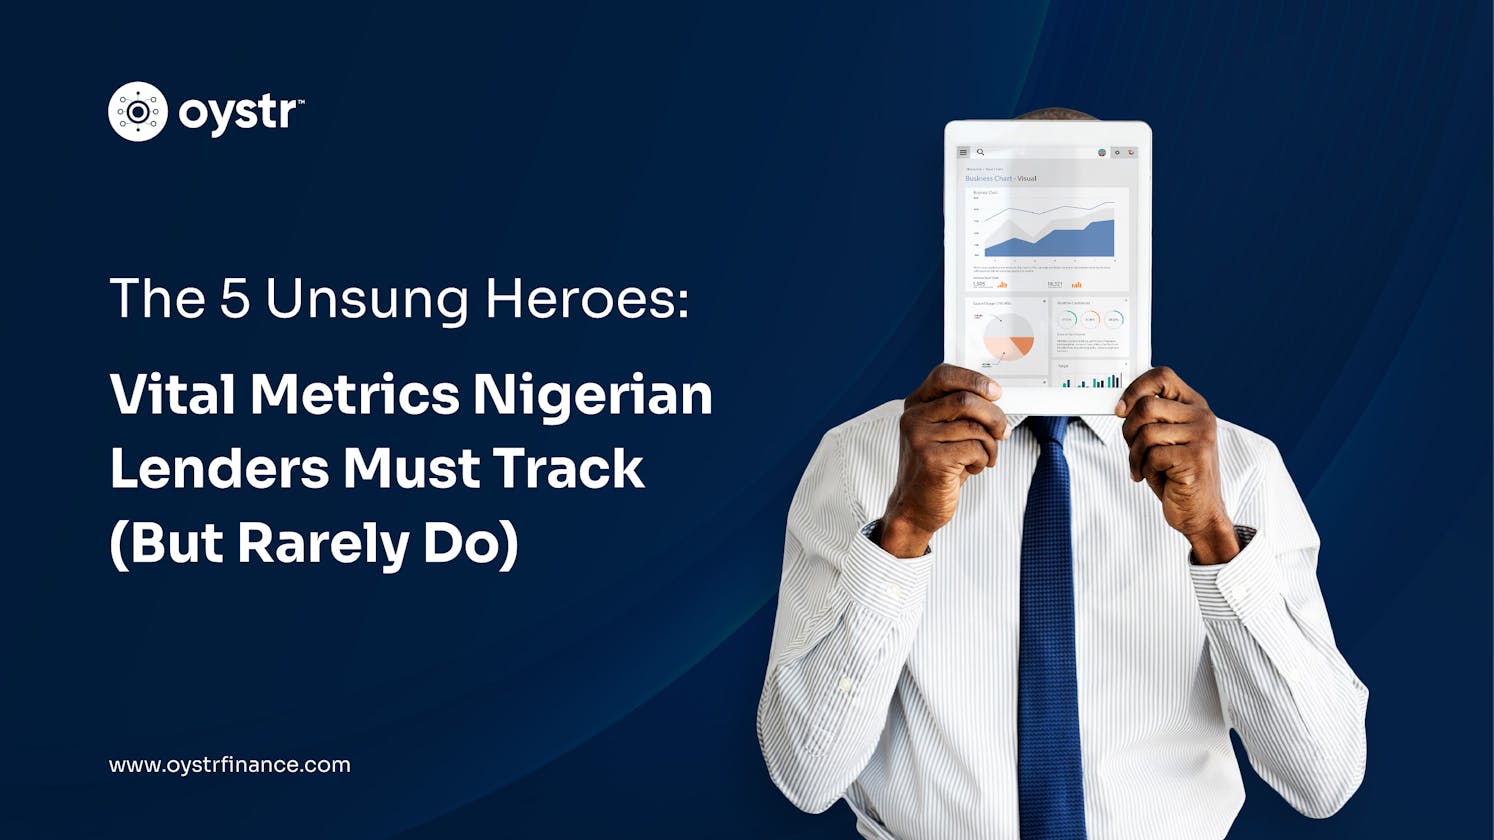 The 5 Unsung Heroes: Vital Metrics Nigerian Lenders Must Track (But Rarely Do)